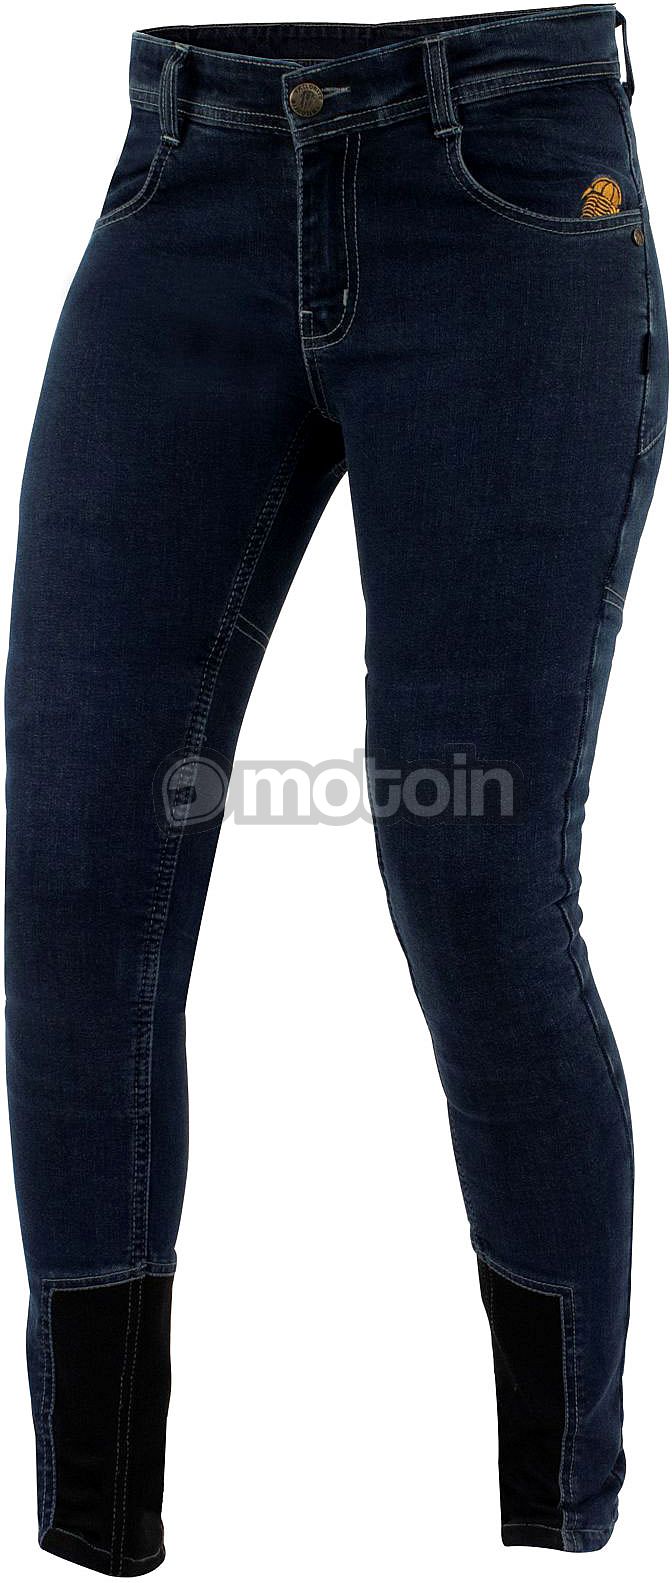 Trilobite All Shape, jeans fijne pasvorm vrouwen